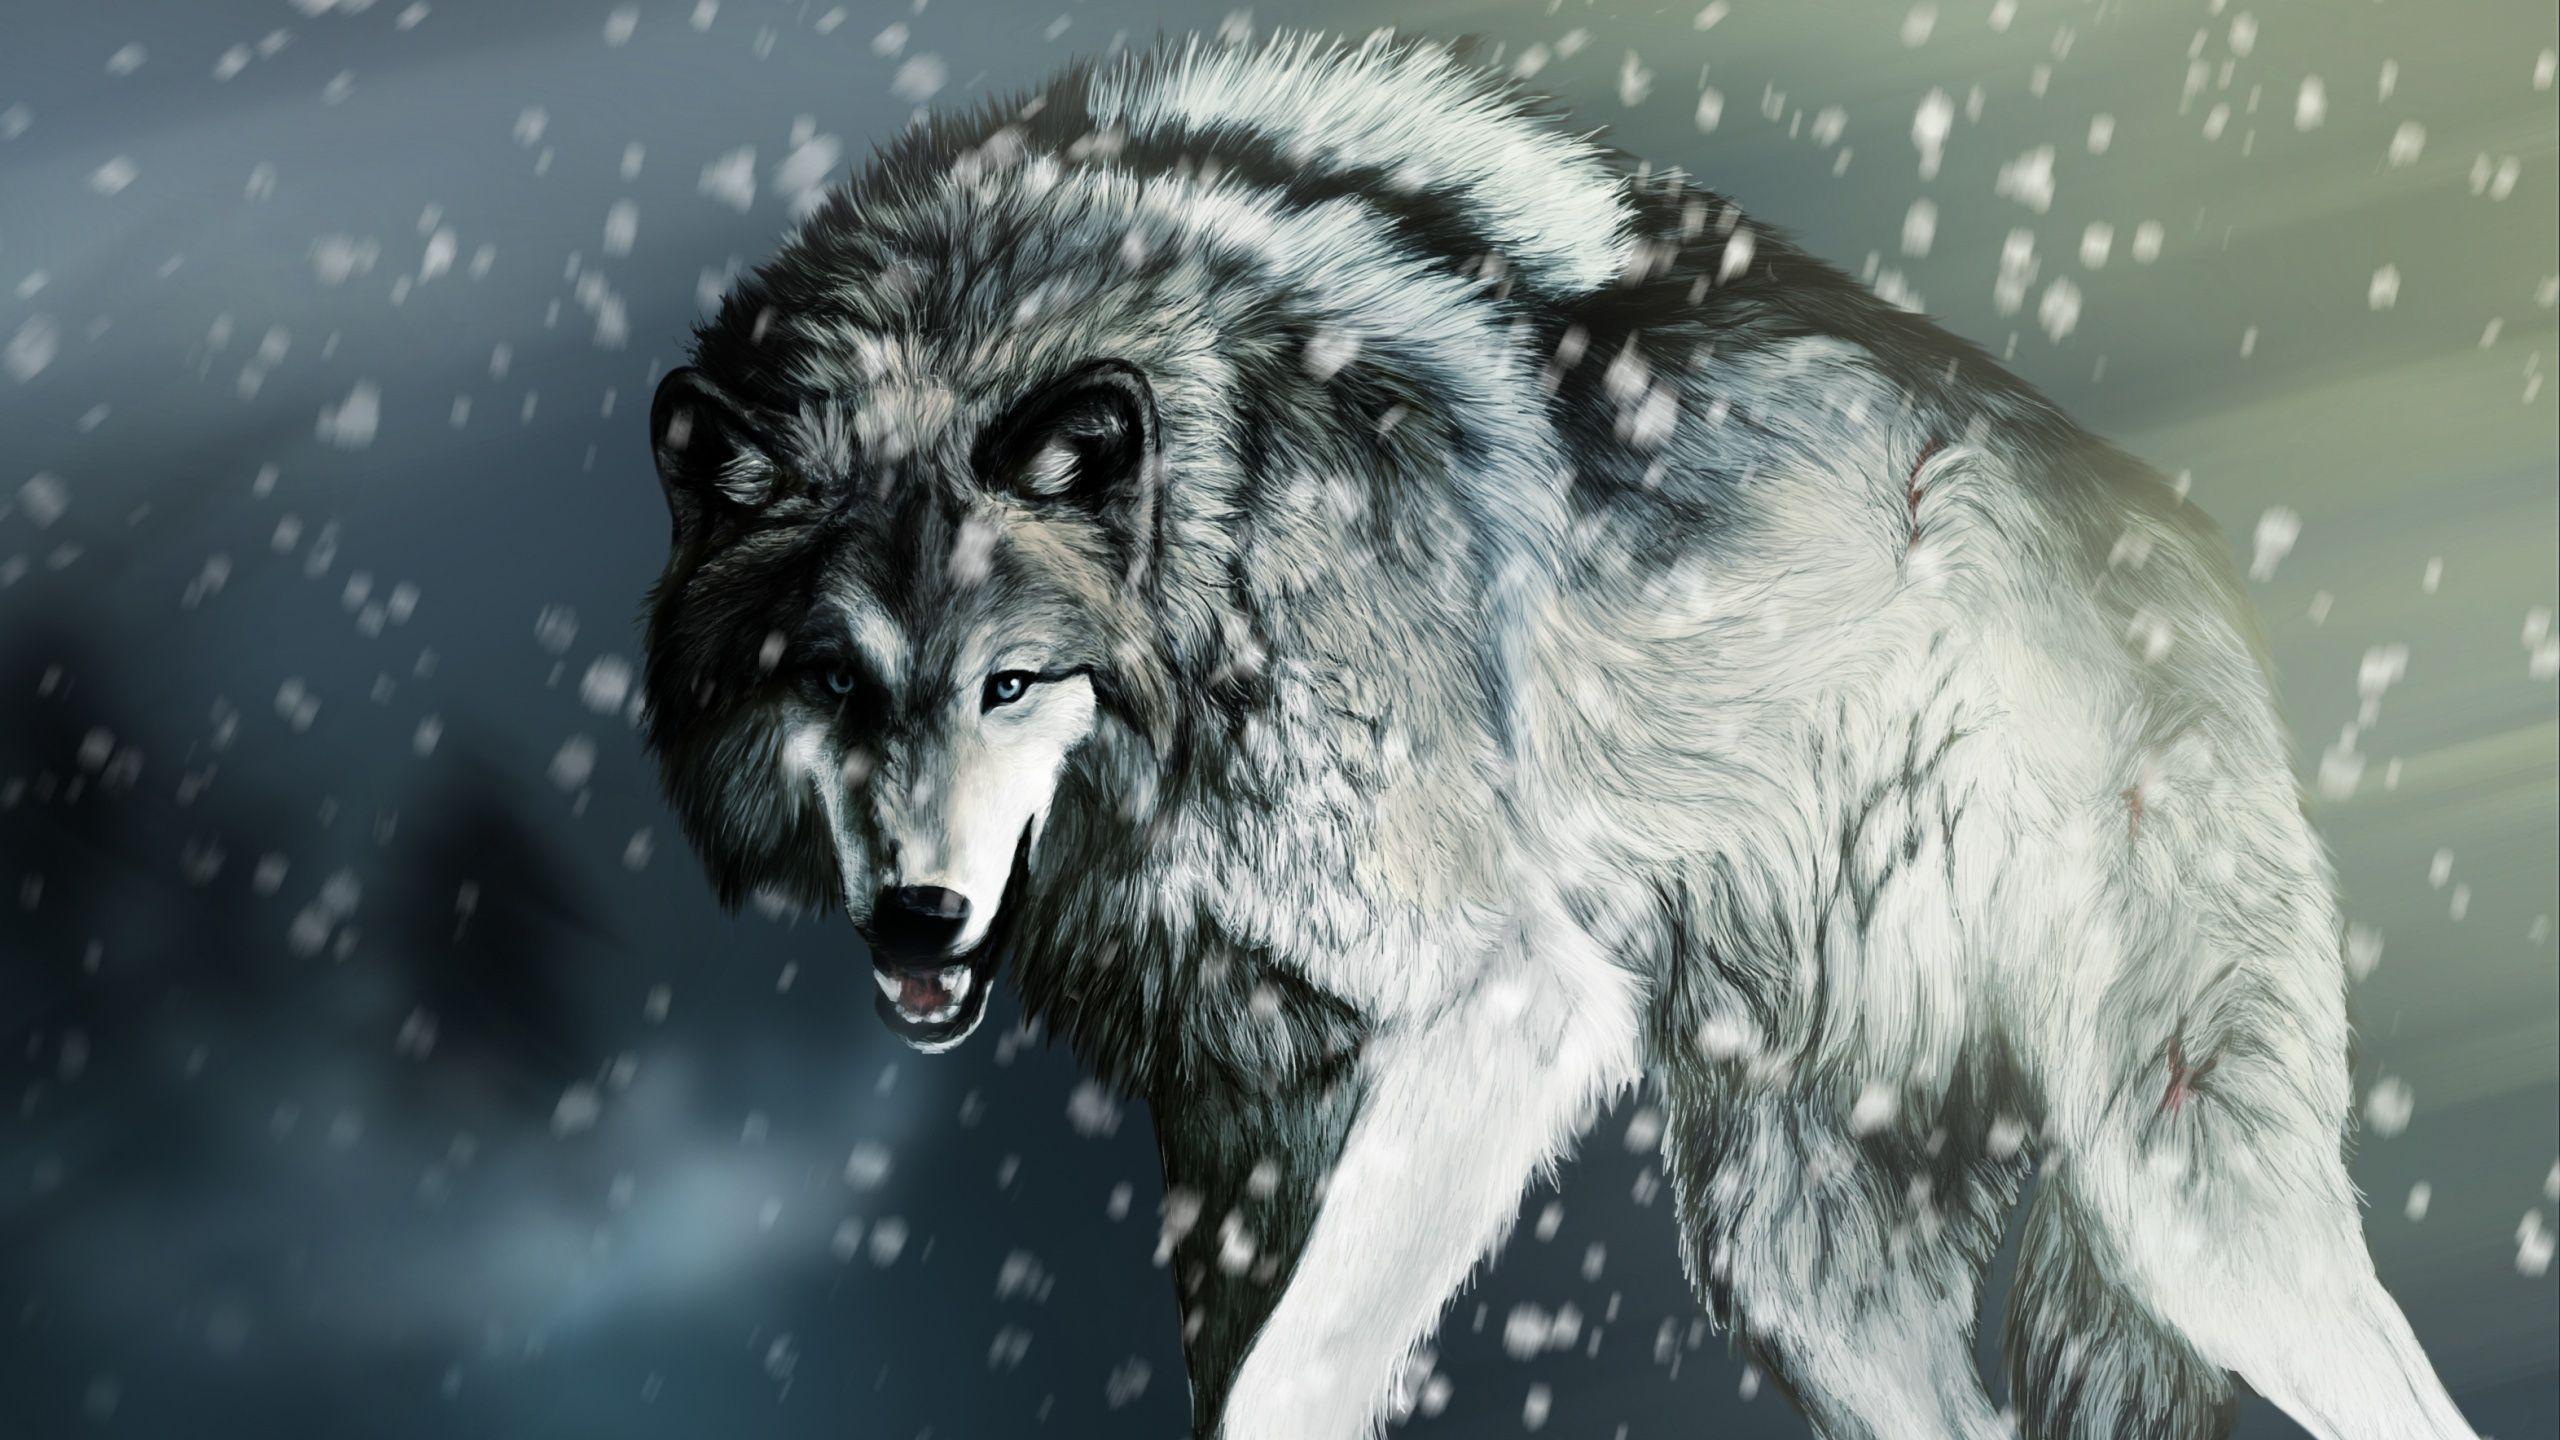 Mac iMac 27 Wolf Wallpaper HD, Desktop Background 2560x1440. Wolf picture, Wolf wallpaper, Winter wolves